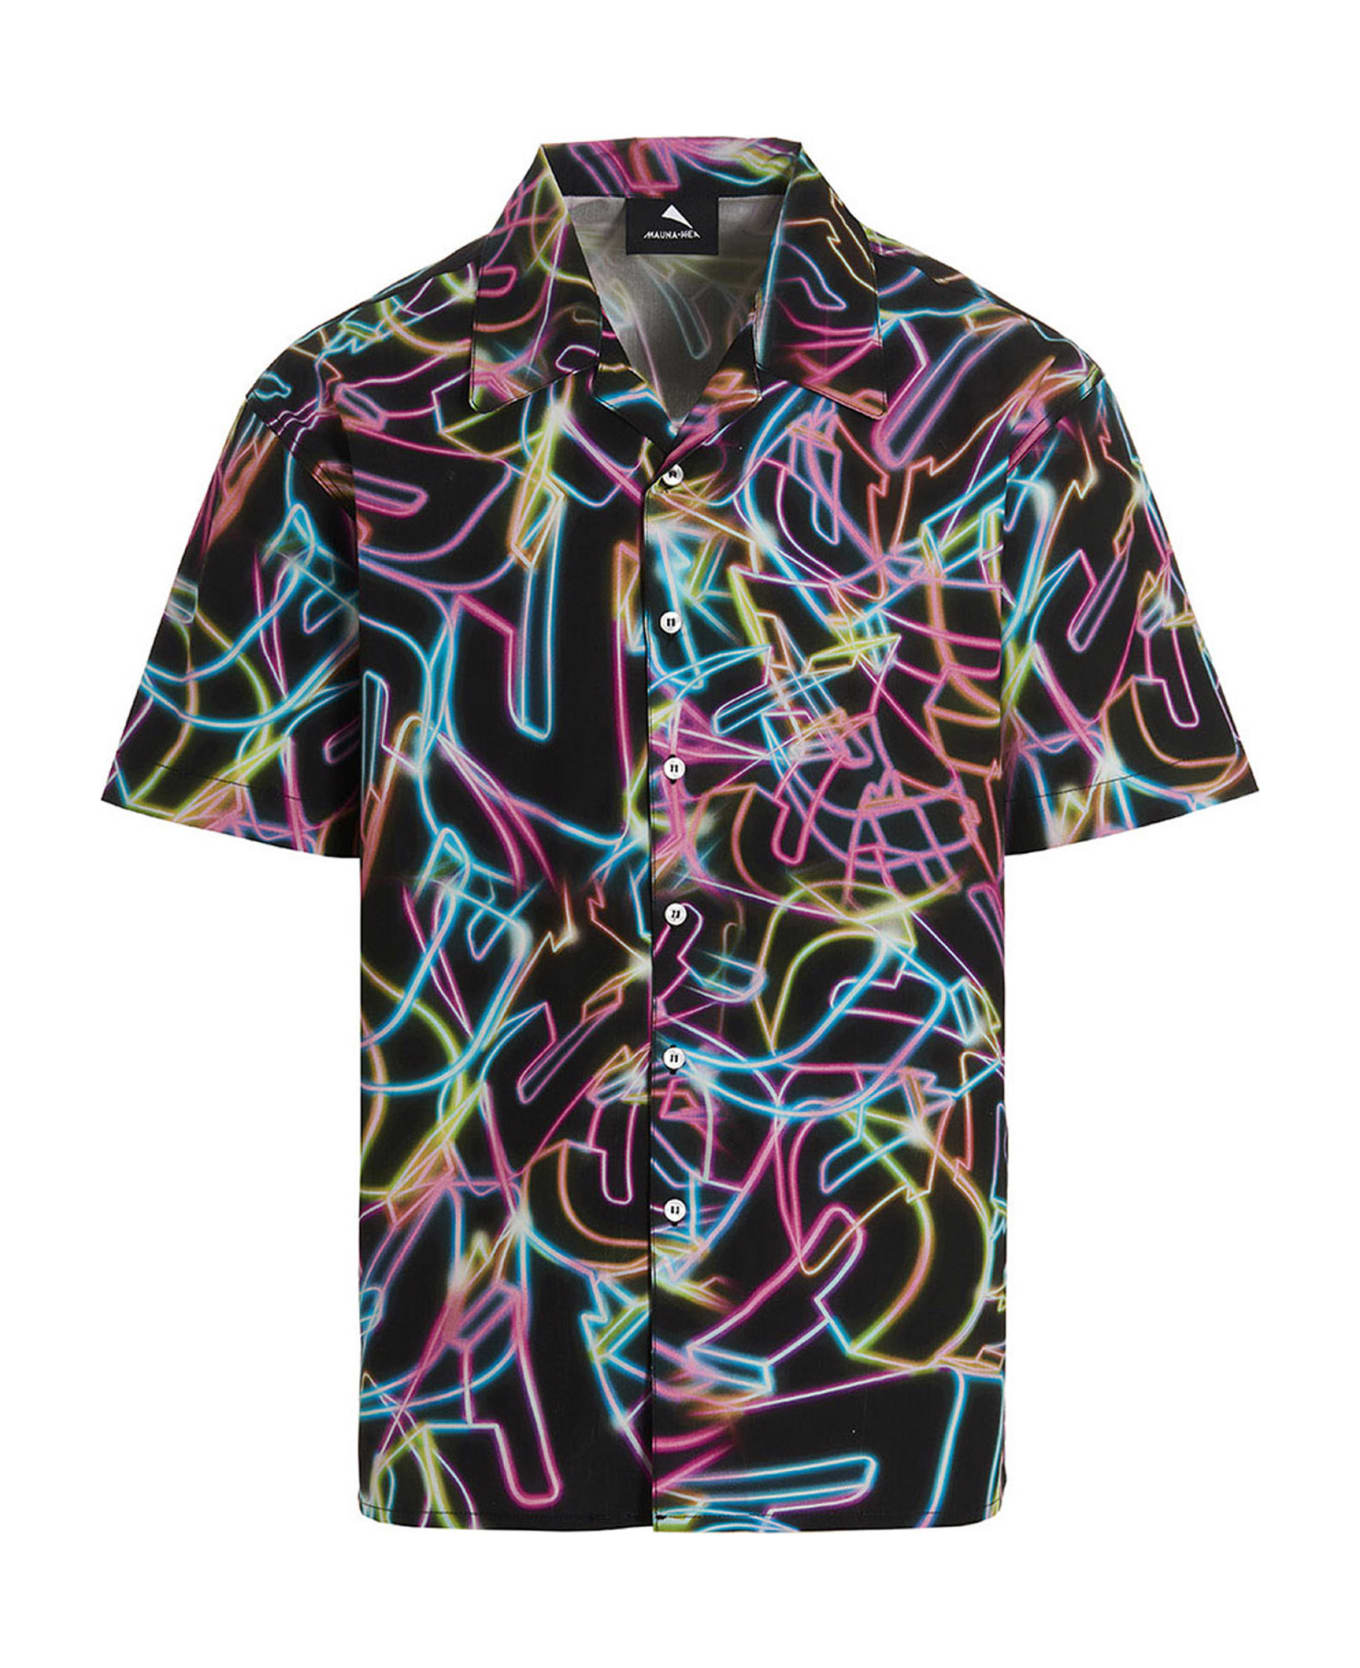 Mauna Kea Shirt Mauna-kea X Jaren Jackson - Multicolor